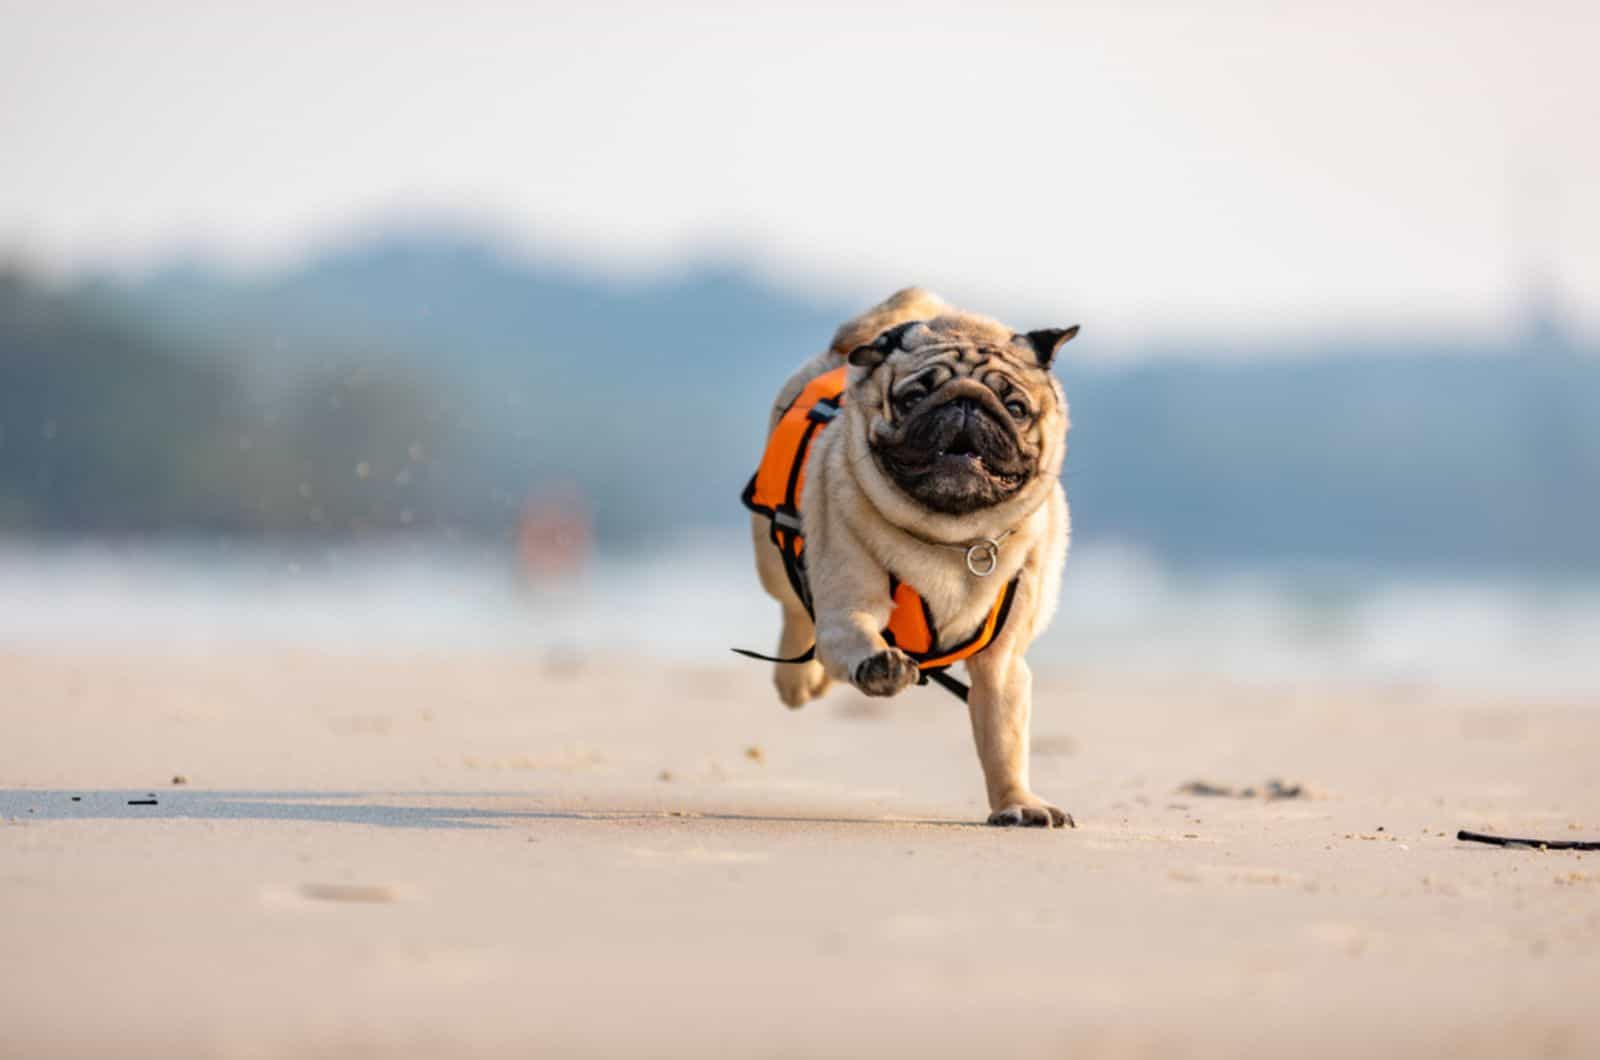 fawn pug running on the beach